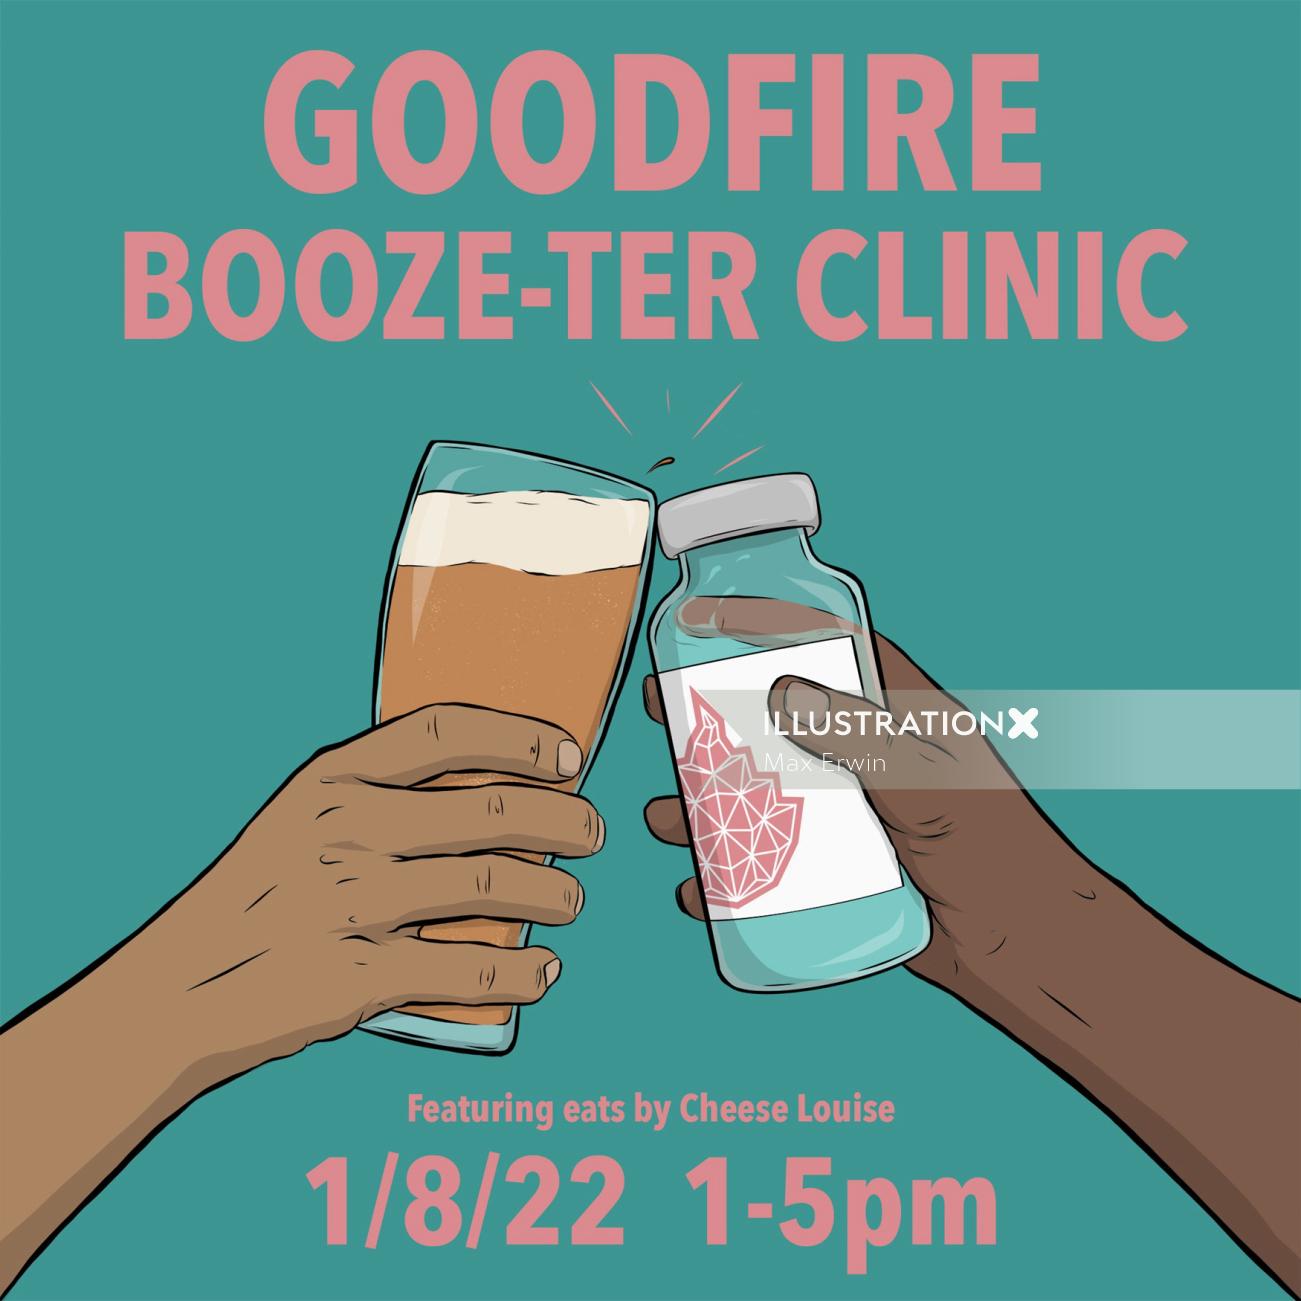 Goodfire Booze-ter Clinic を宣伝するポスター